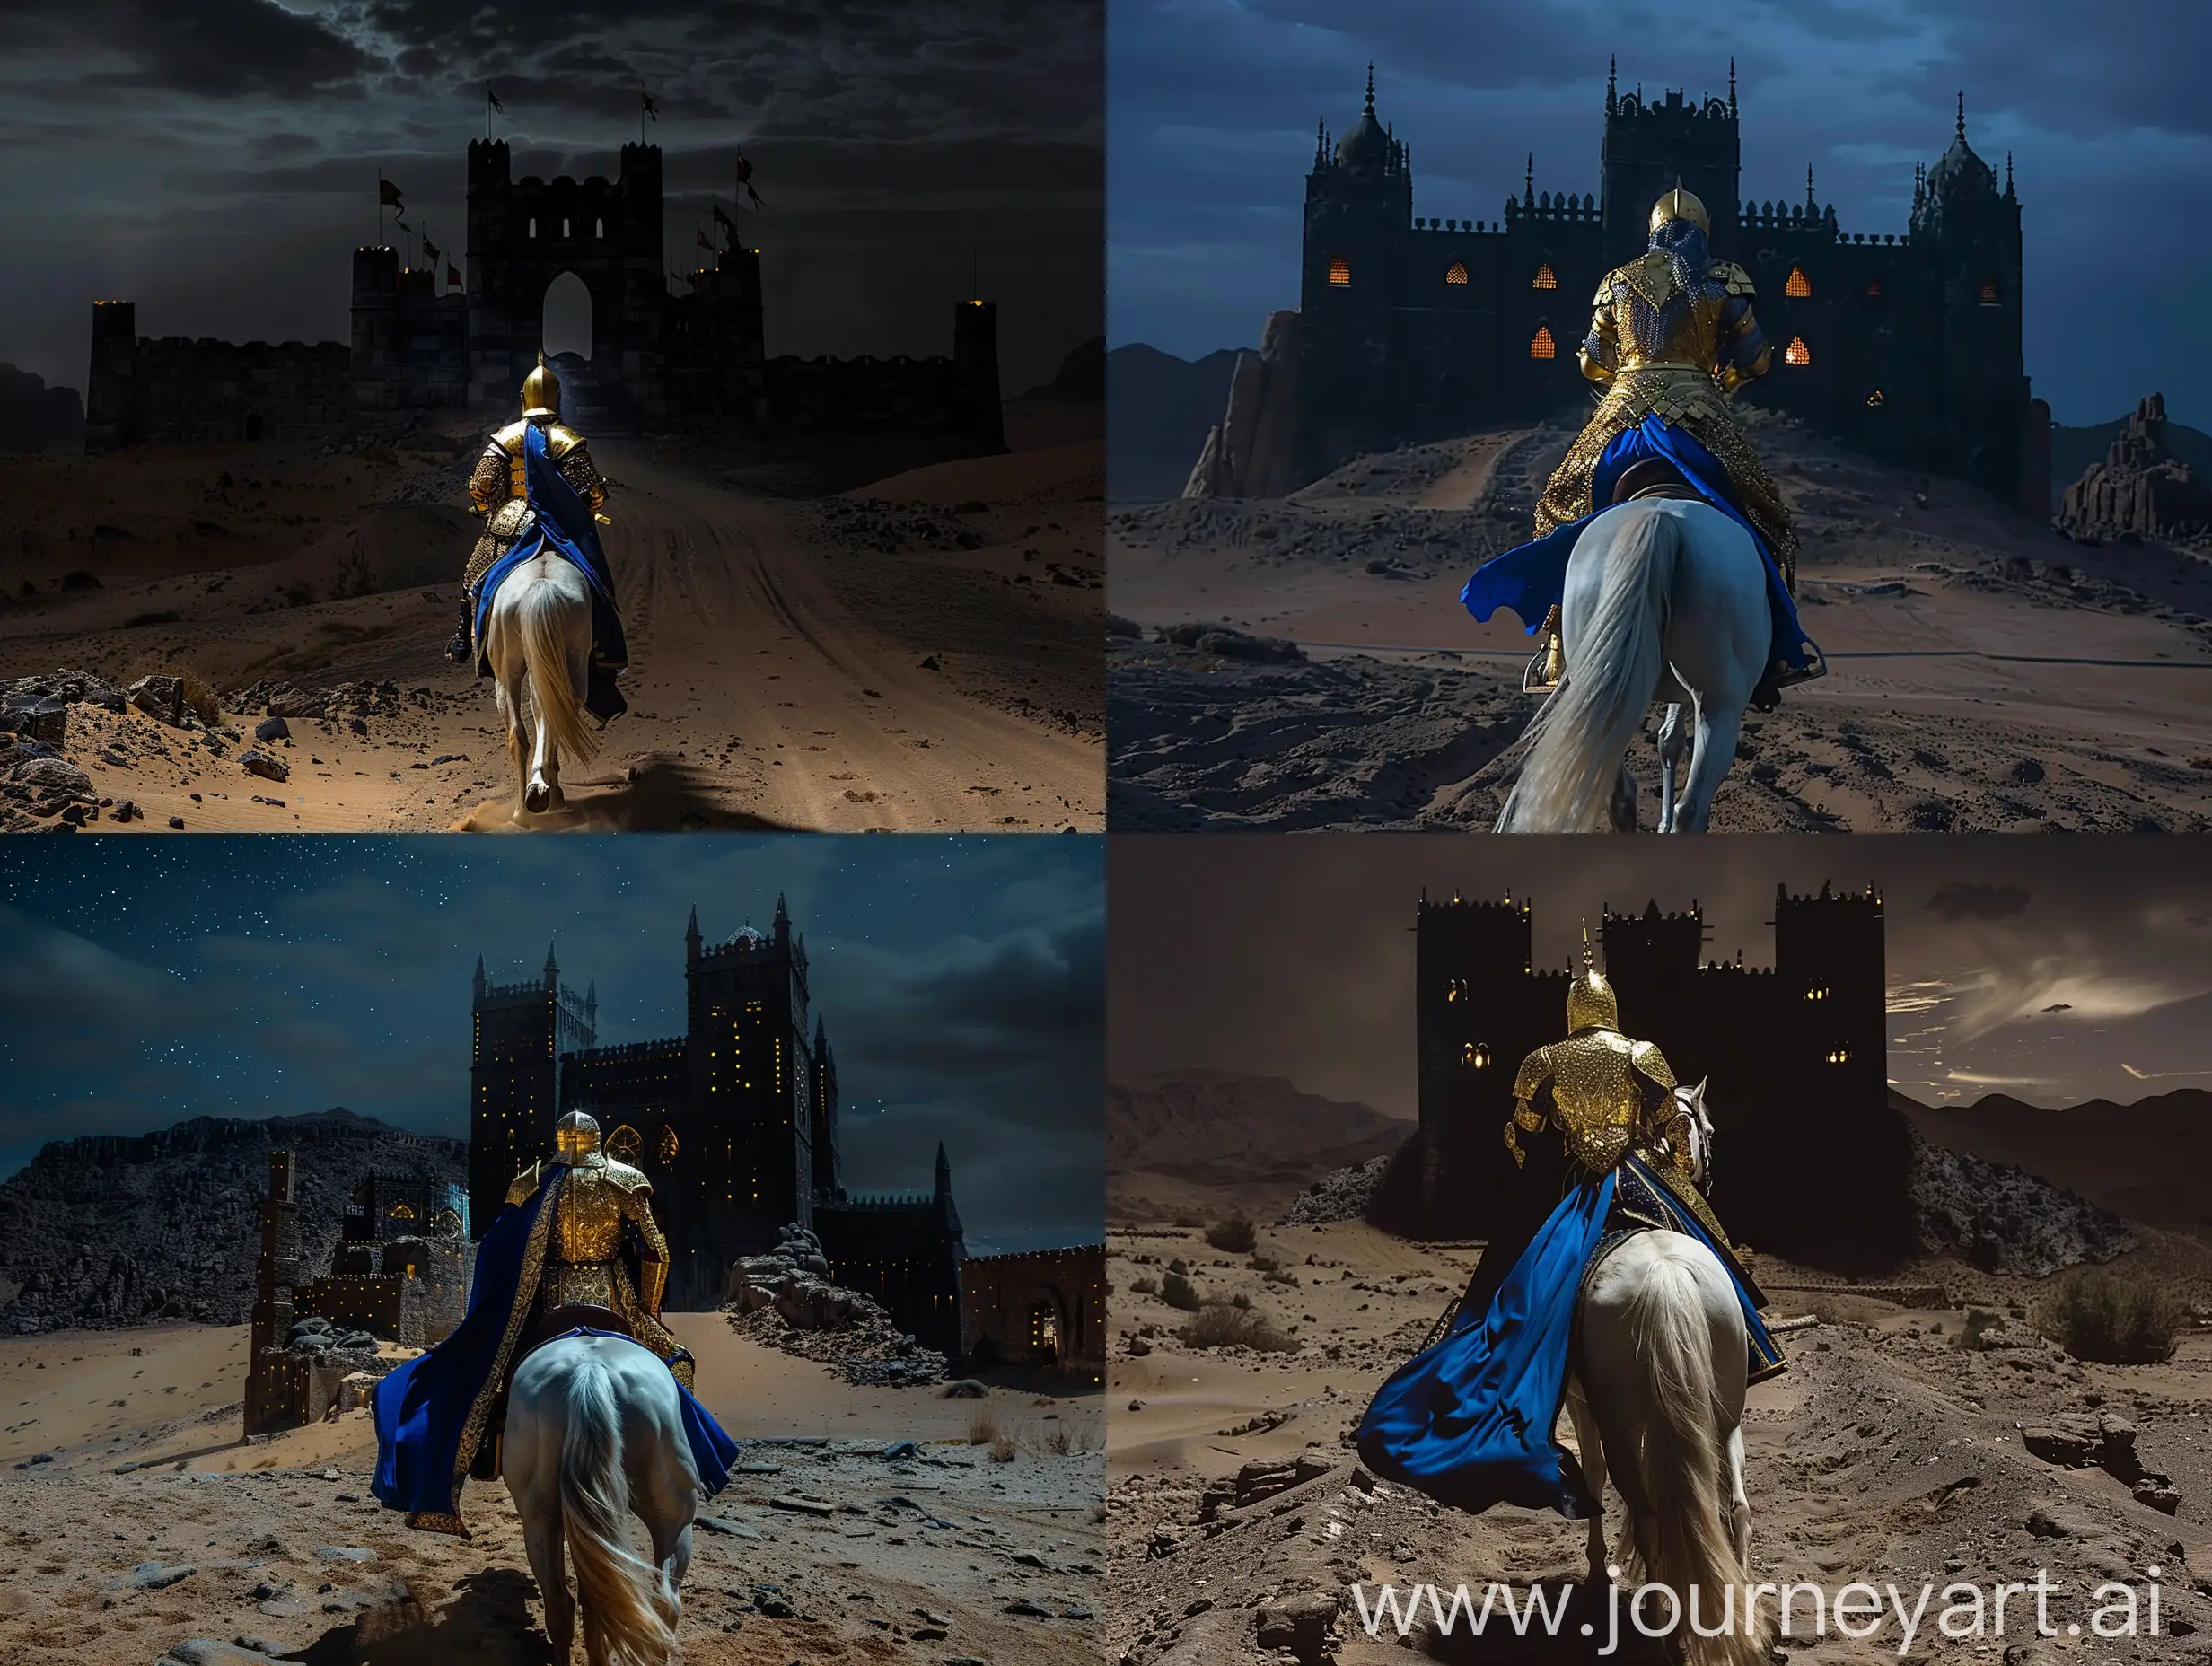 Goldenarmored-Knight-Riding-White-Horse-into-Desert-Castle-at-Night